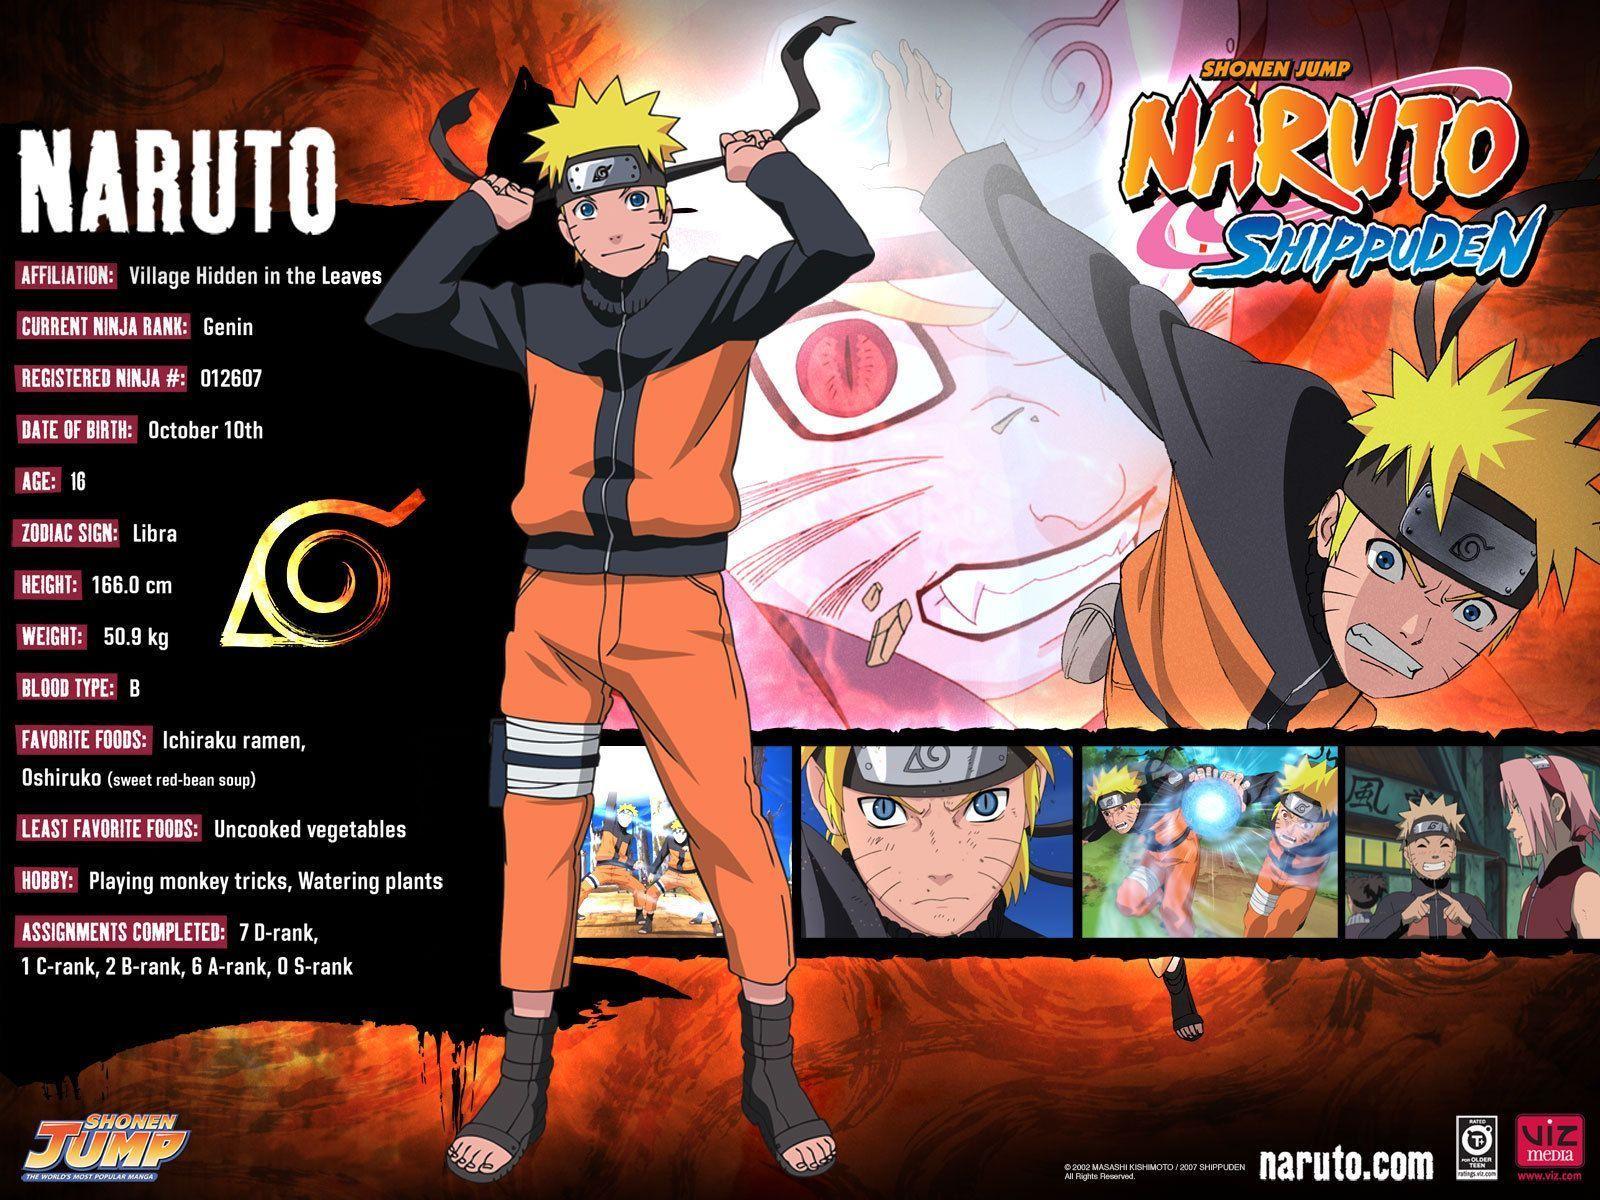 Gambar Para Pemain Naruto Shippuden 2015 TERBARU 2015